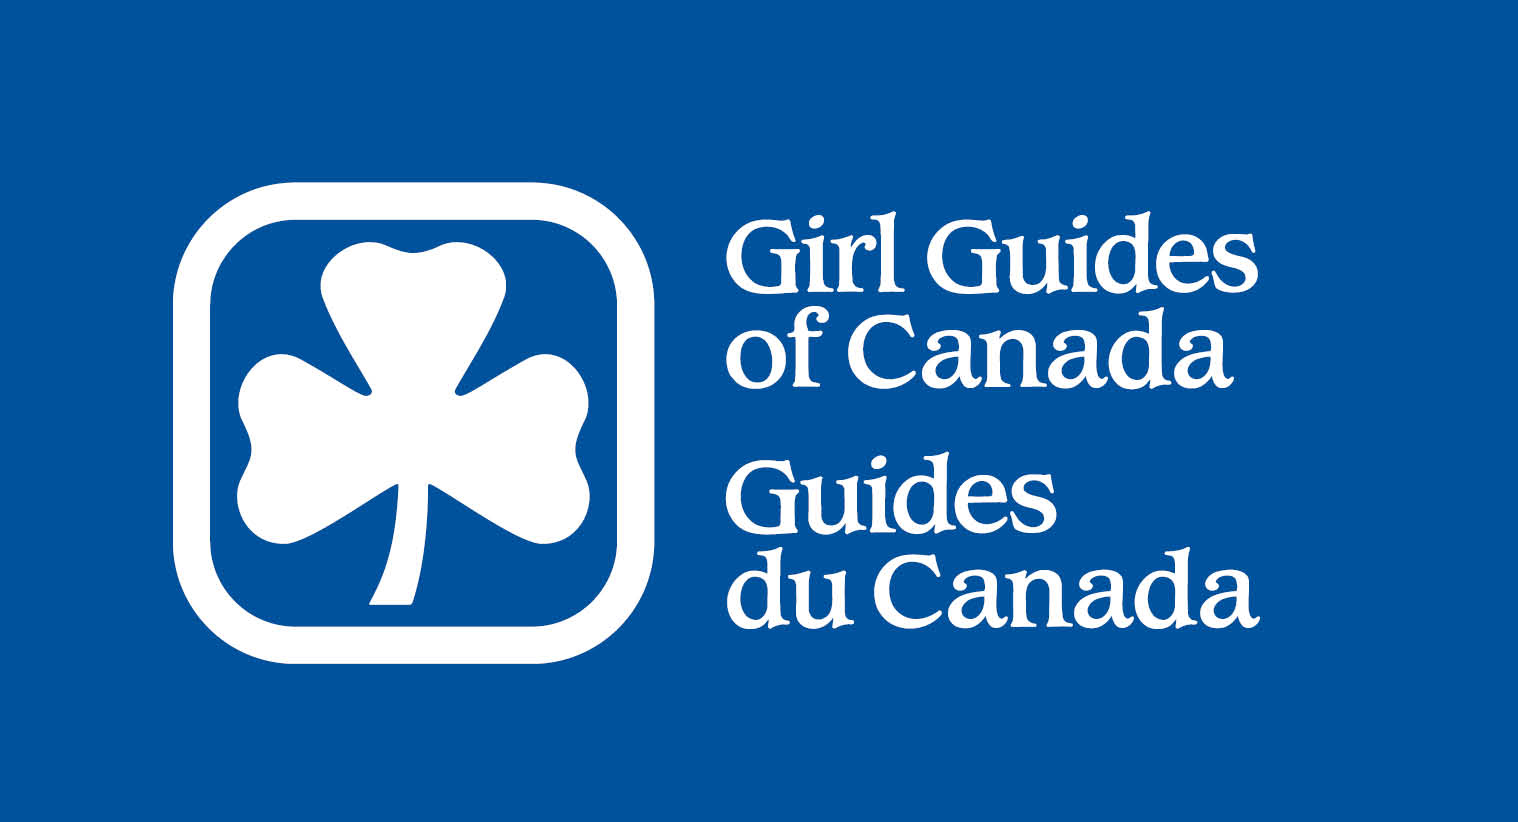 clip art girl guides canada - photo #22